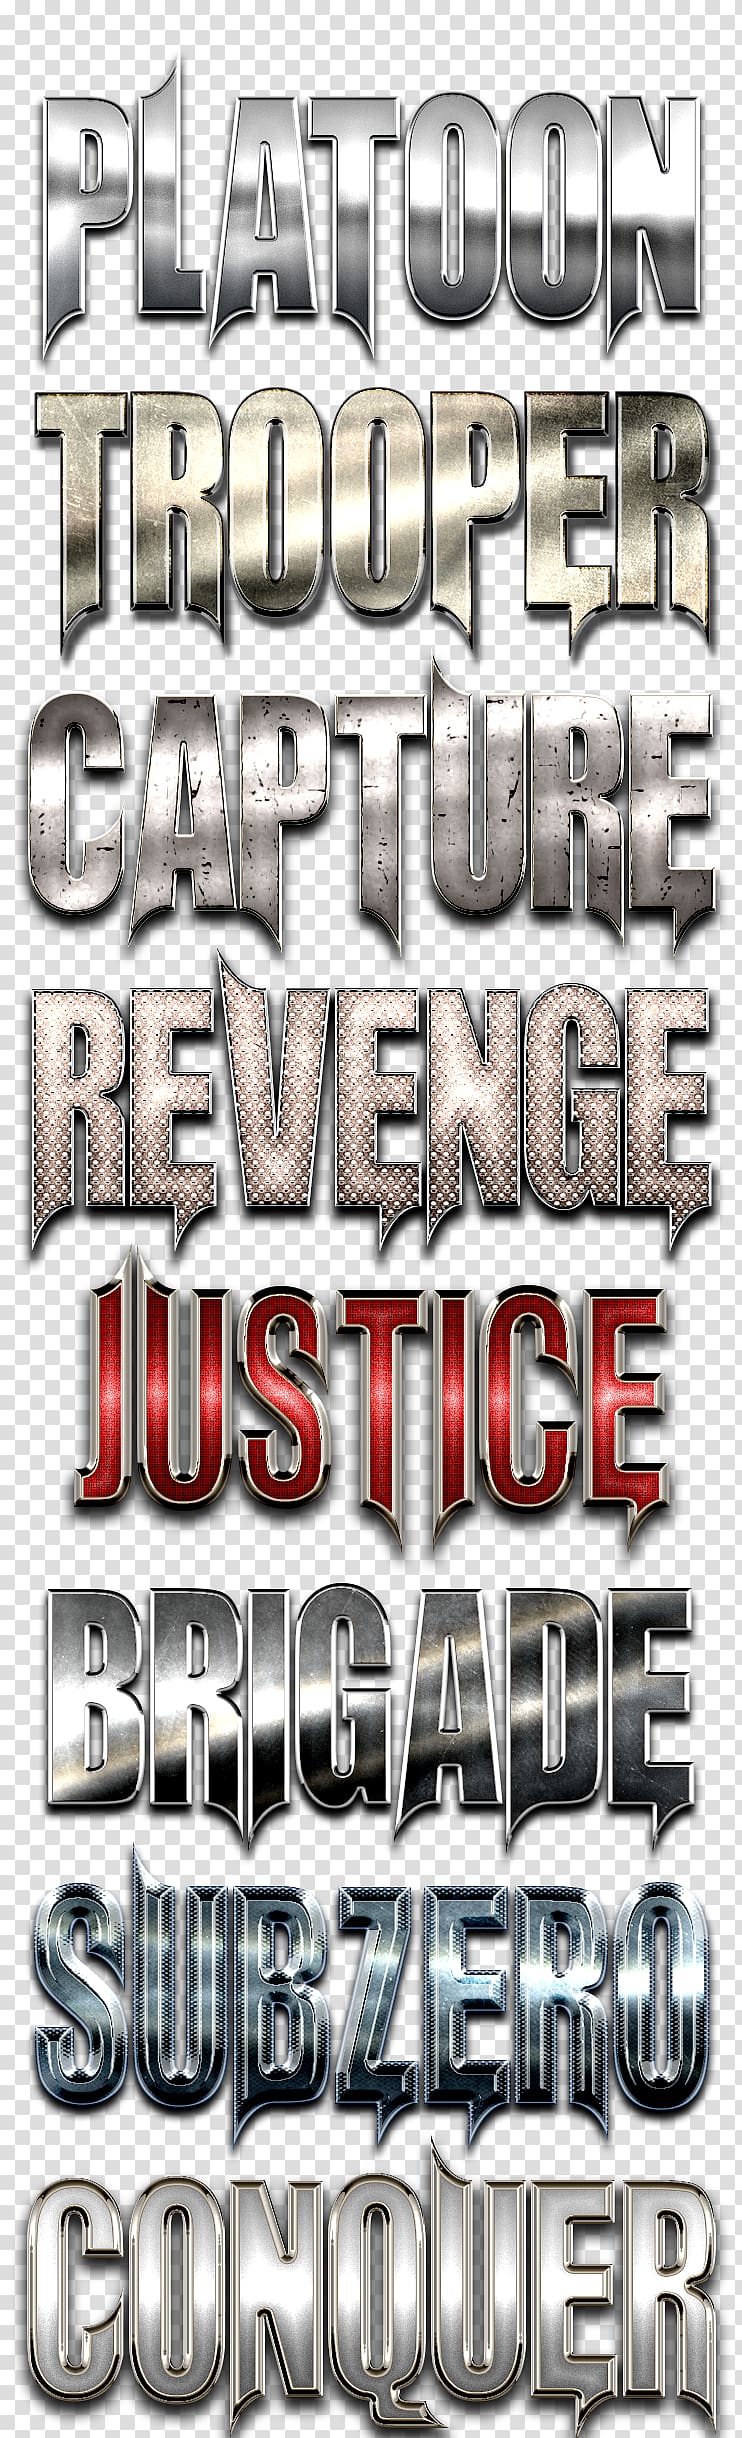 platoon trooper capture revenge justice brigade subzero conquer text, Metal Typeface Font, Metal Font transparent background PNG clipart